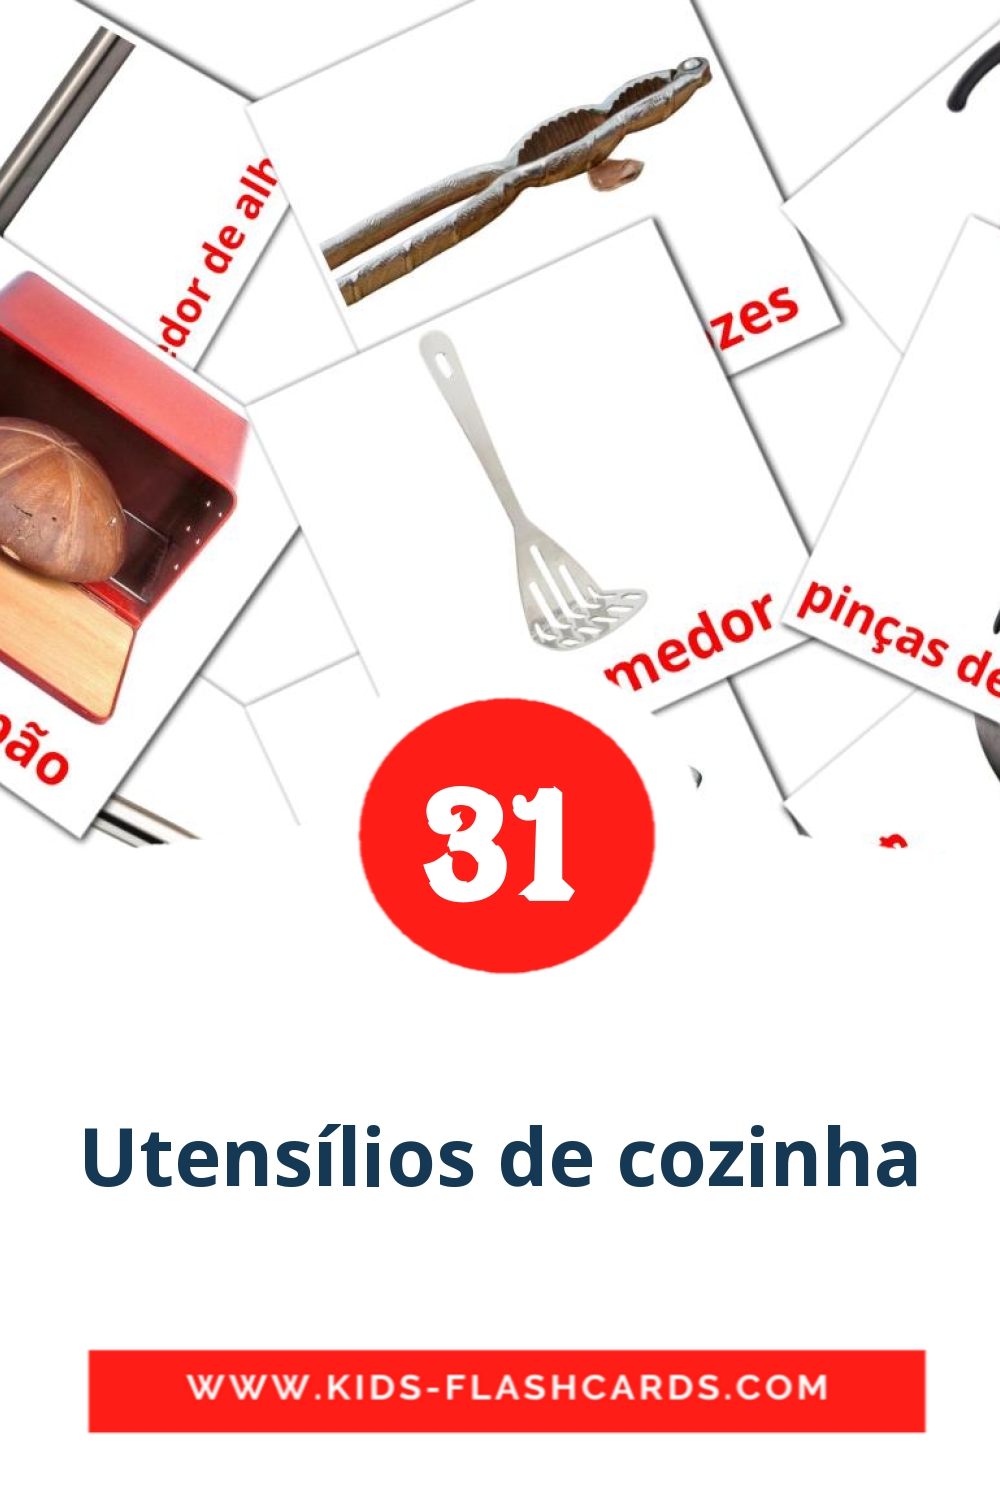 35 Utensílios de cozinha Picture Cards for Kindergarden in portuguese